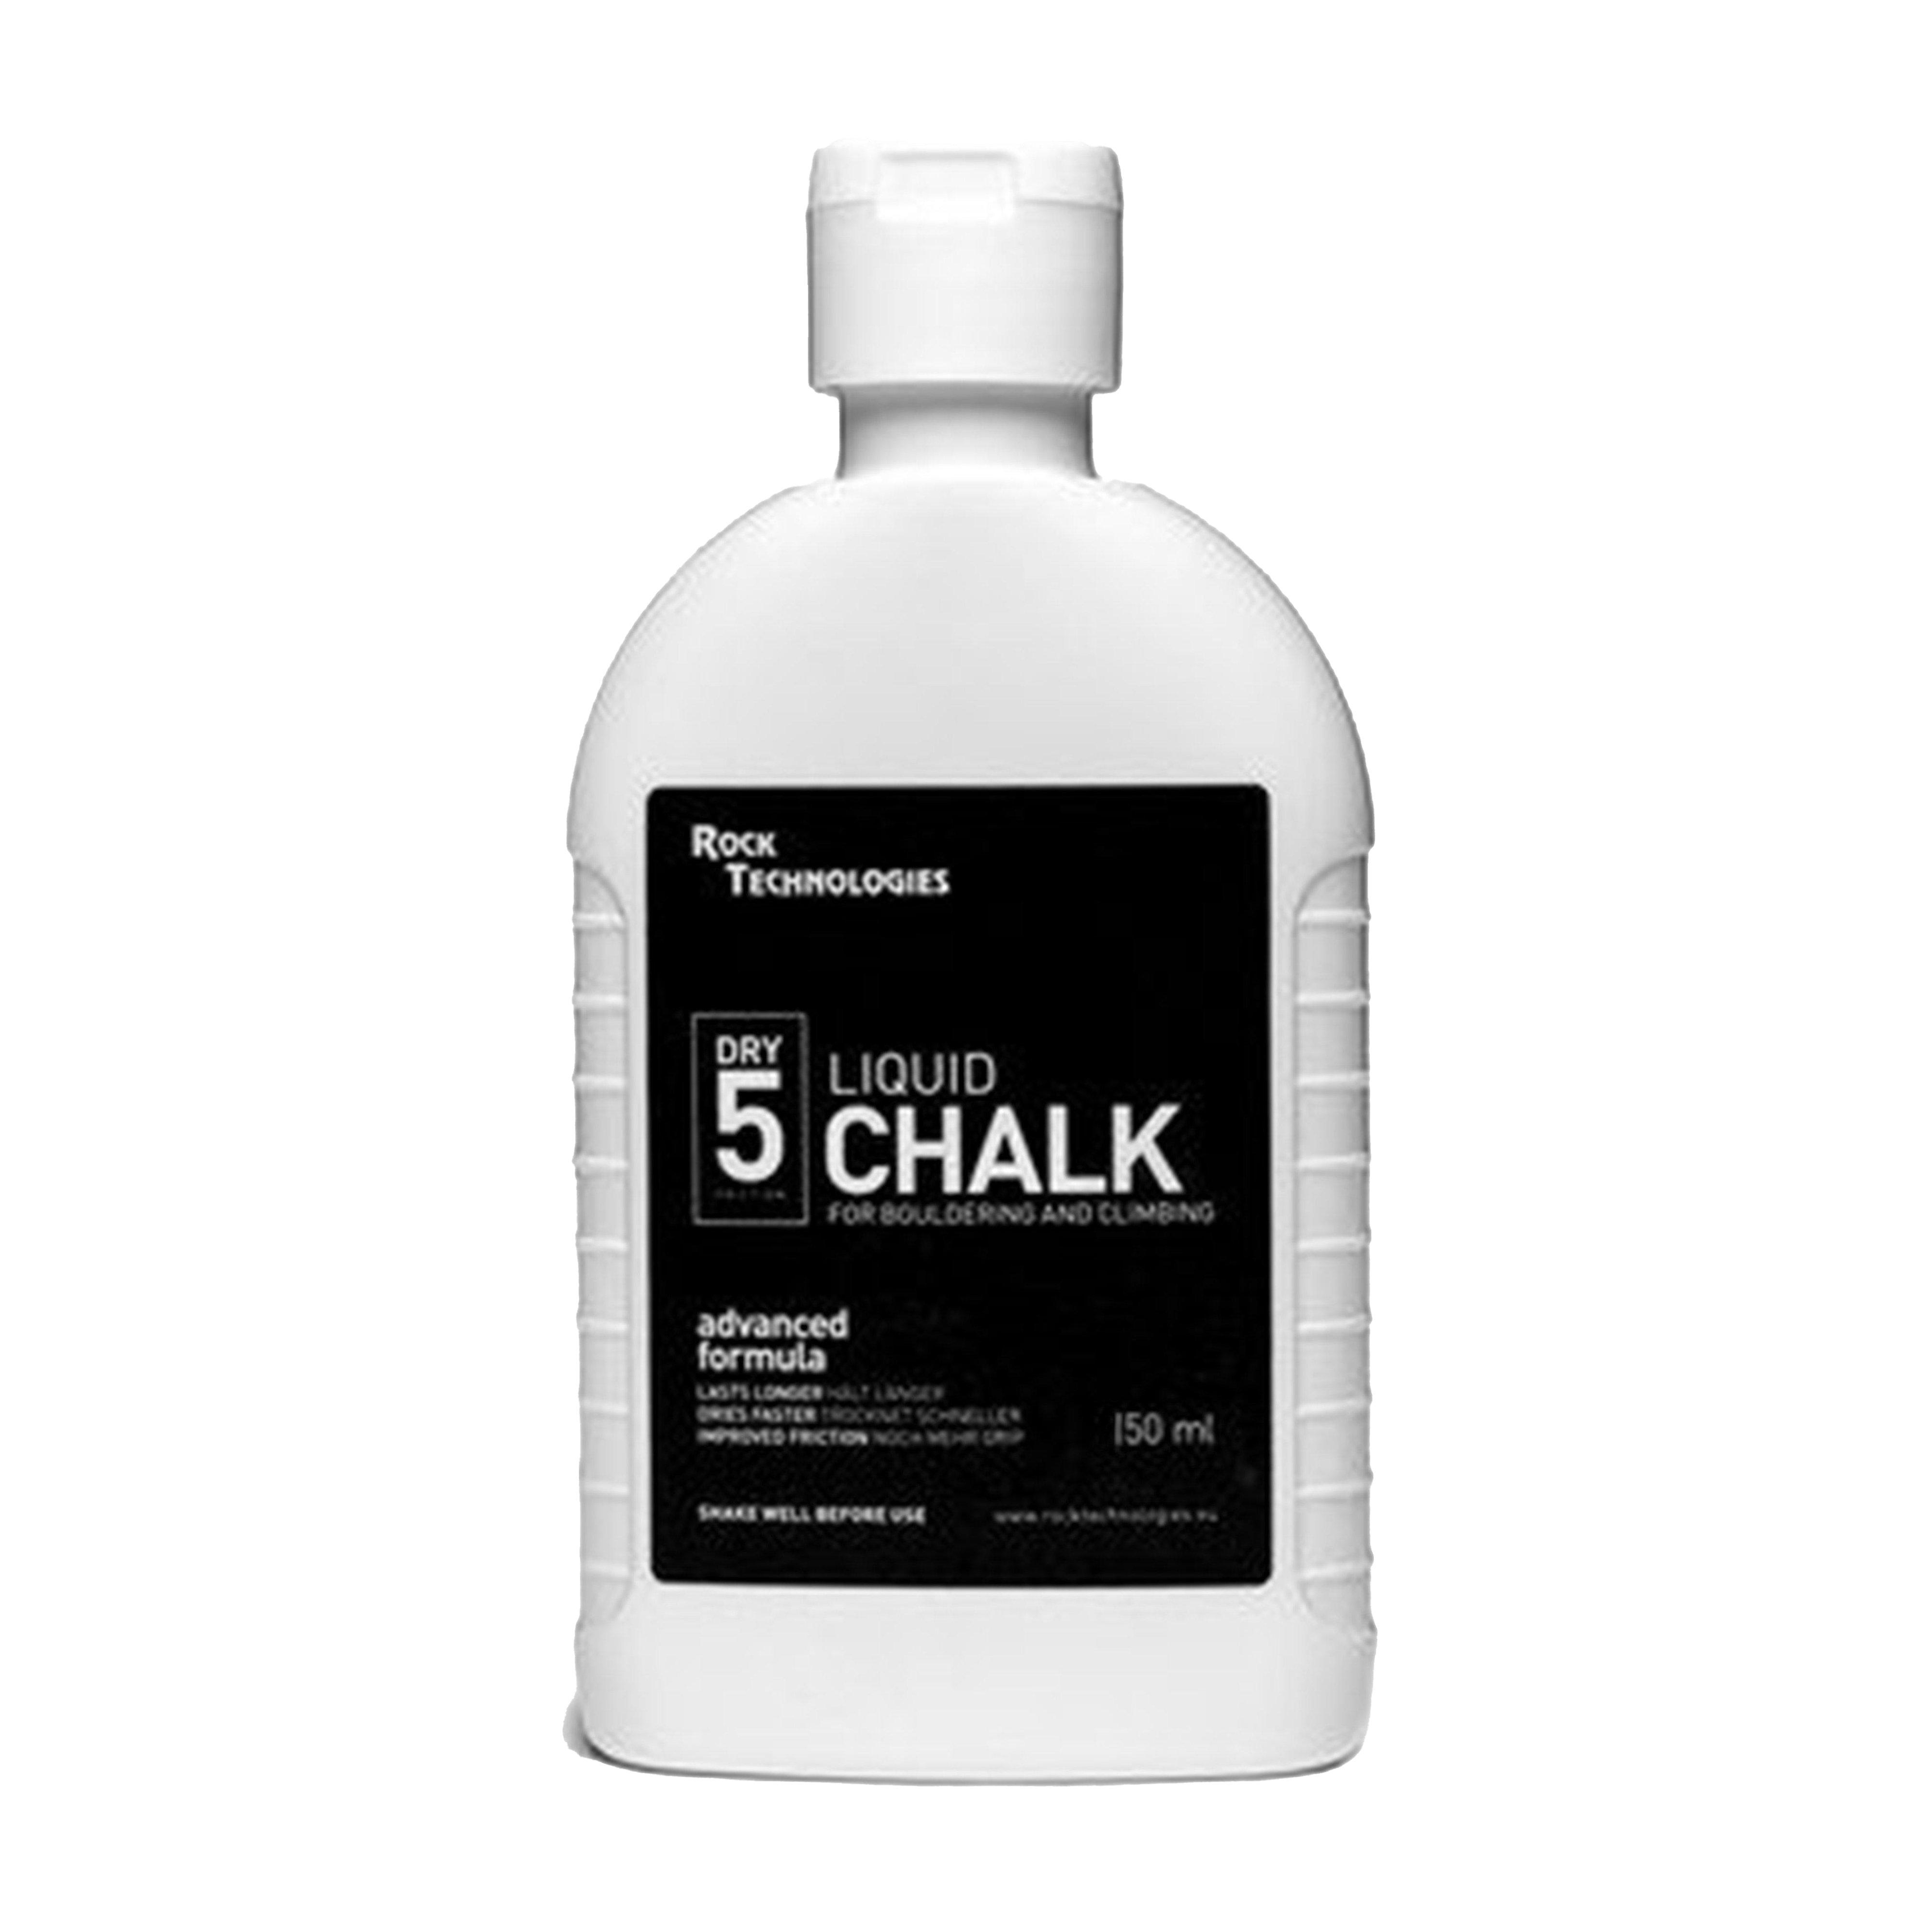 Rock Technologi Liquid Chalk Review